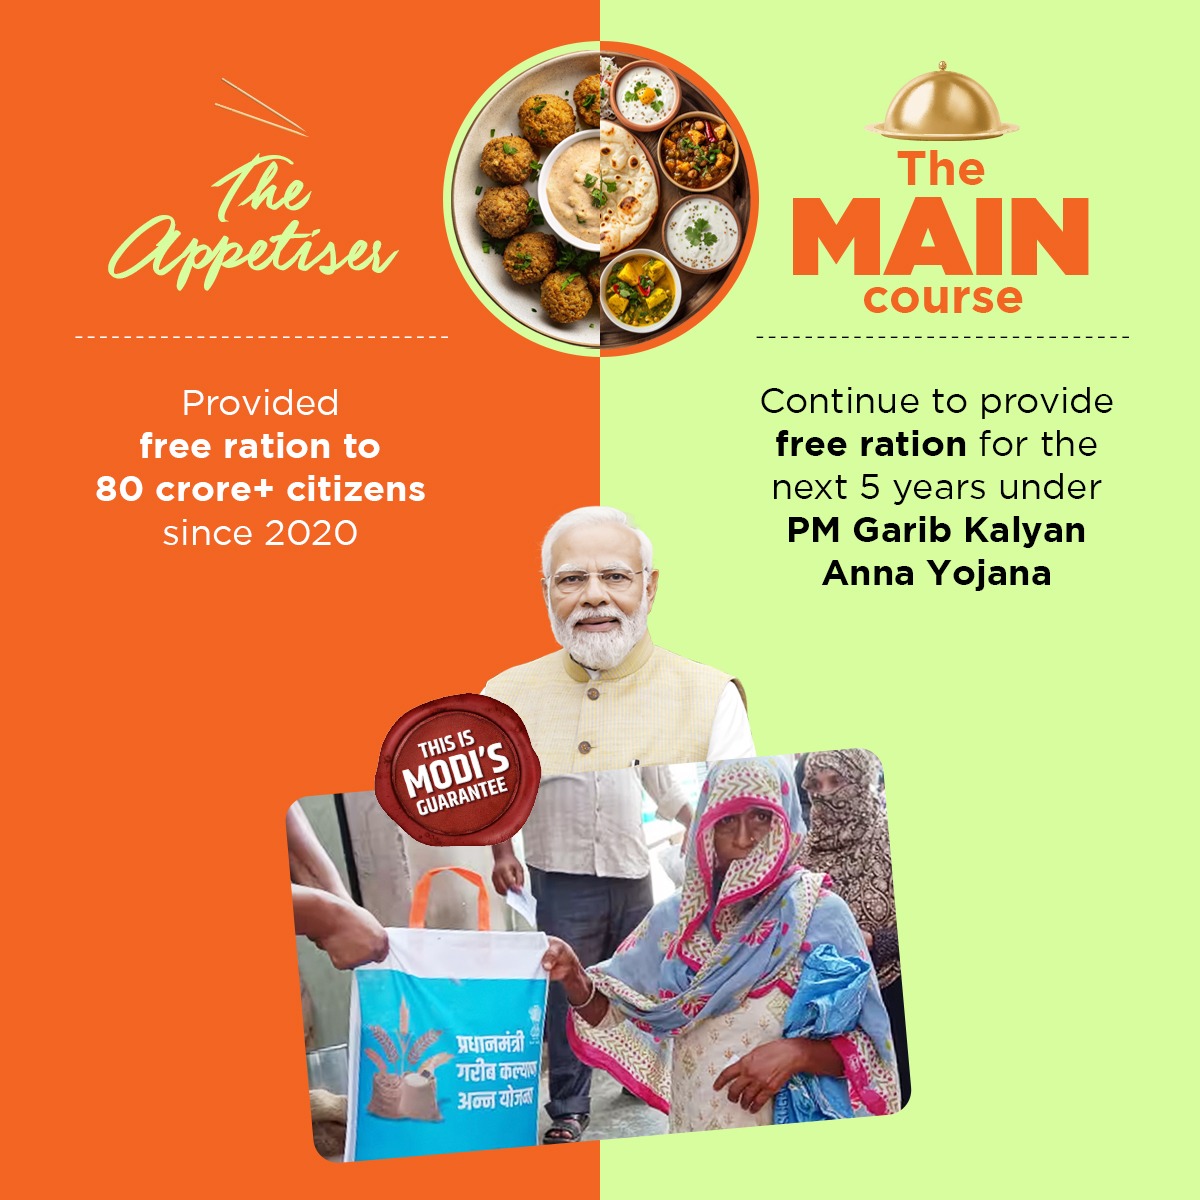 Free ration for the poor for the next 5 years under PM Garib Kalyan Anna Yojana... 

Yes, the 'main course' awaits you!   

#PhirEkBaarModiSarkar #ModiHaiToMumkinHai 
#Bjpeastdelhi #HarshMalhotraBJP